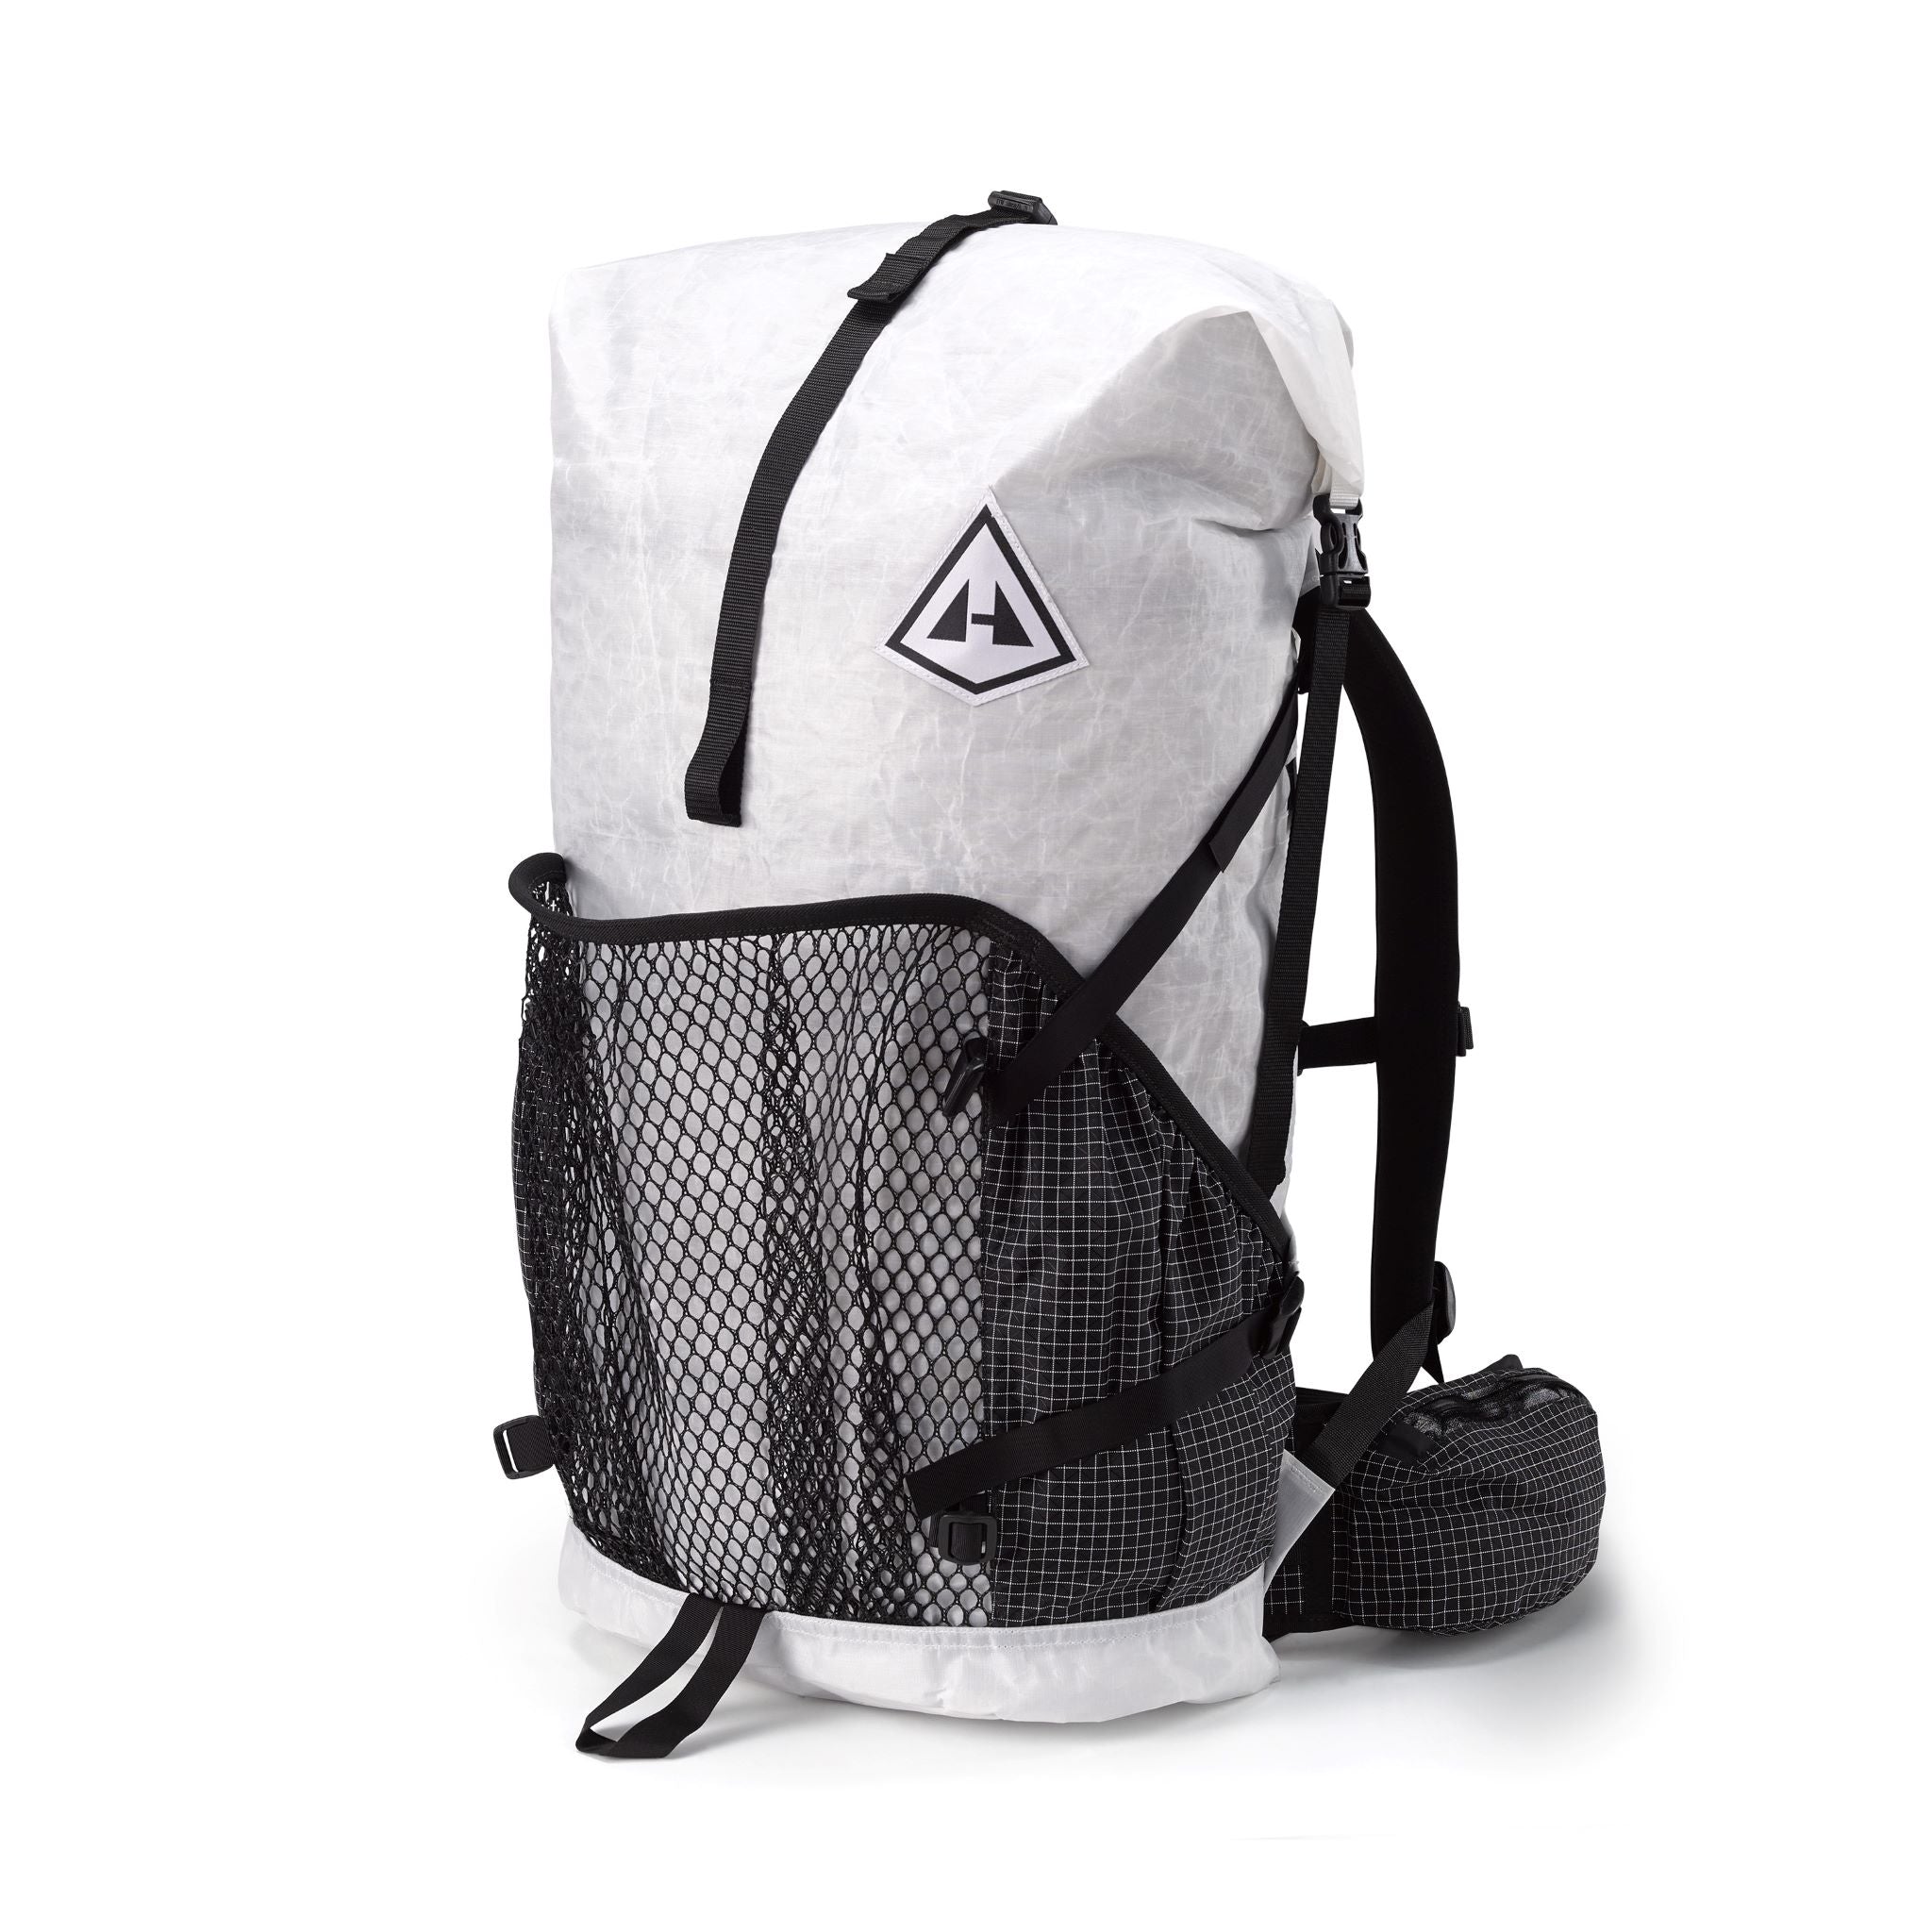 Hyperlite Mountain Gear 3400 Windrider 55L Ultralight Backpack